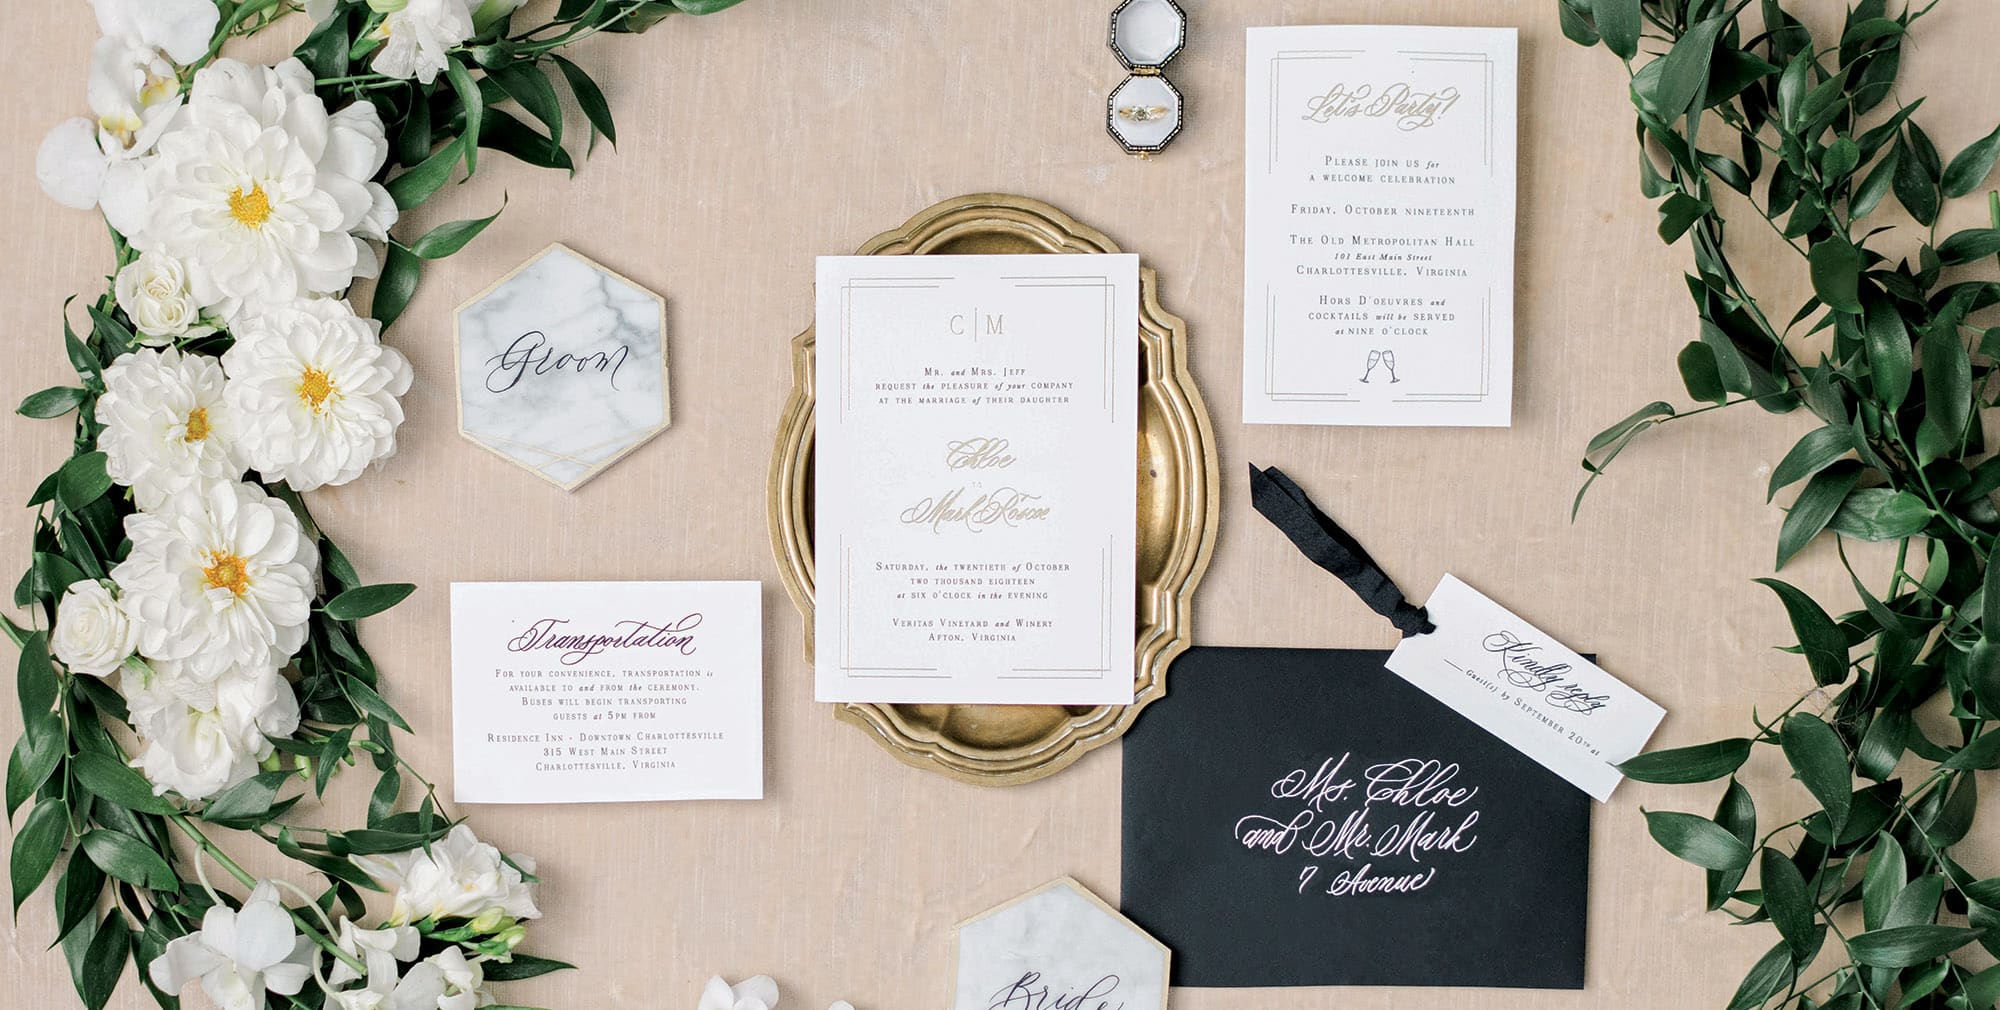 Etiquette 101 - Addressing Your Wedding Invitation Envelopes